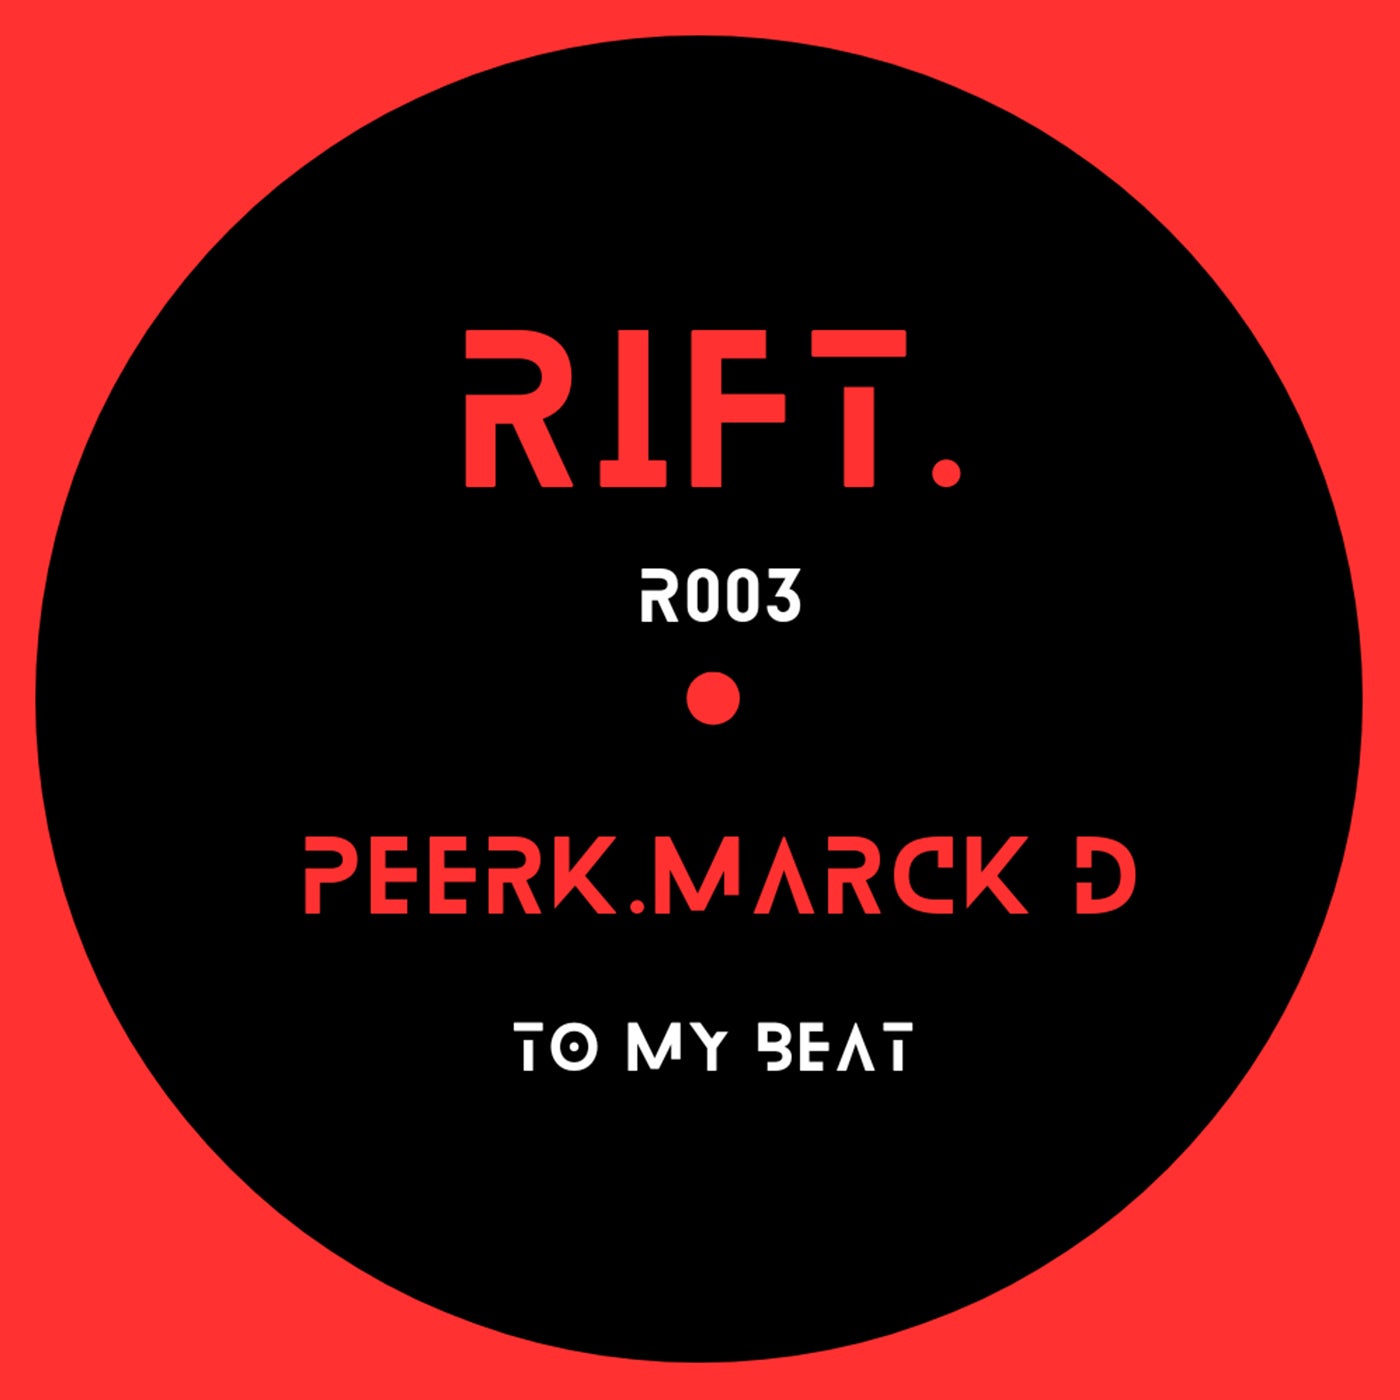 image cover: Marck D, Peerk - To My Beat on RIFT